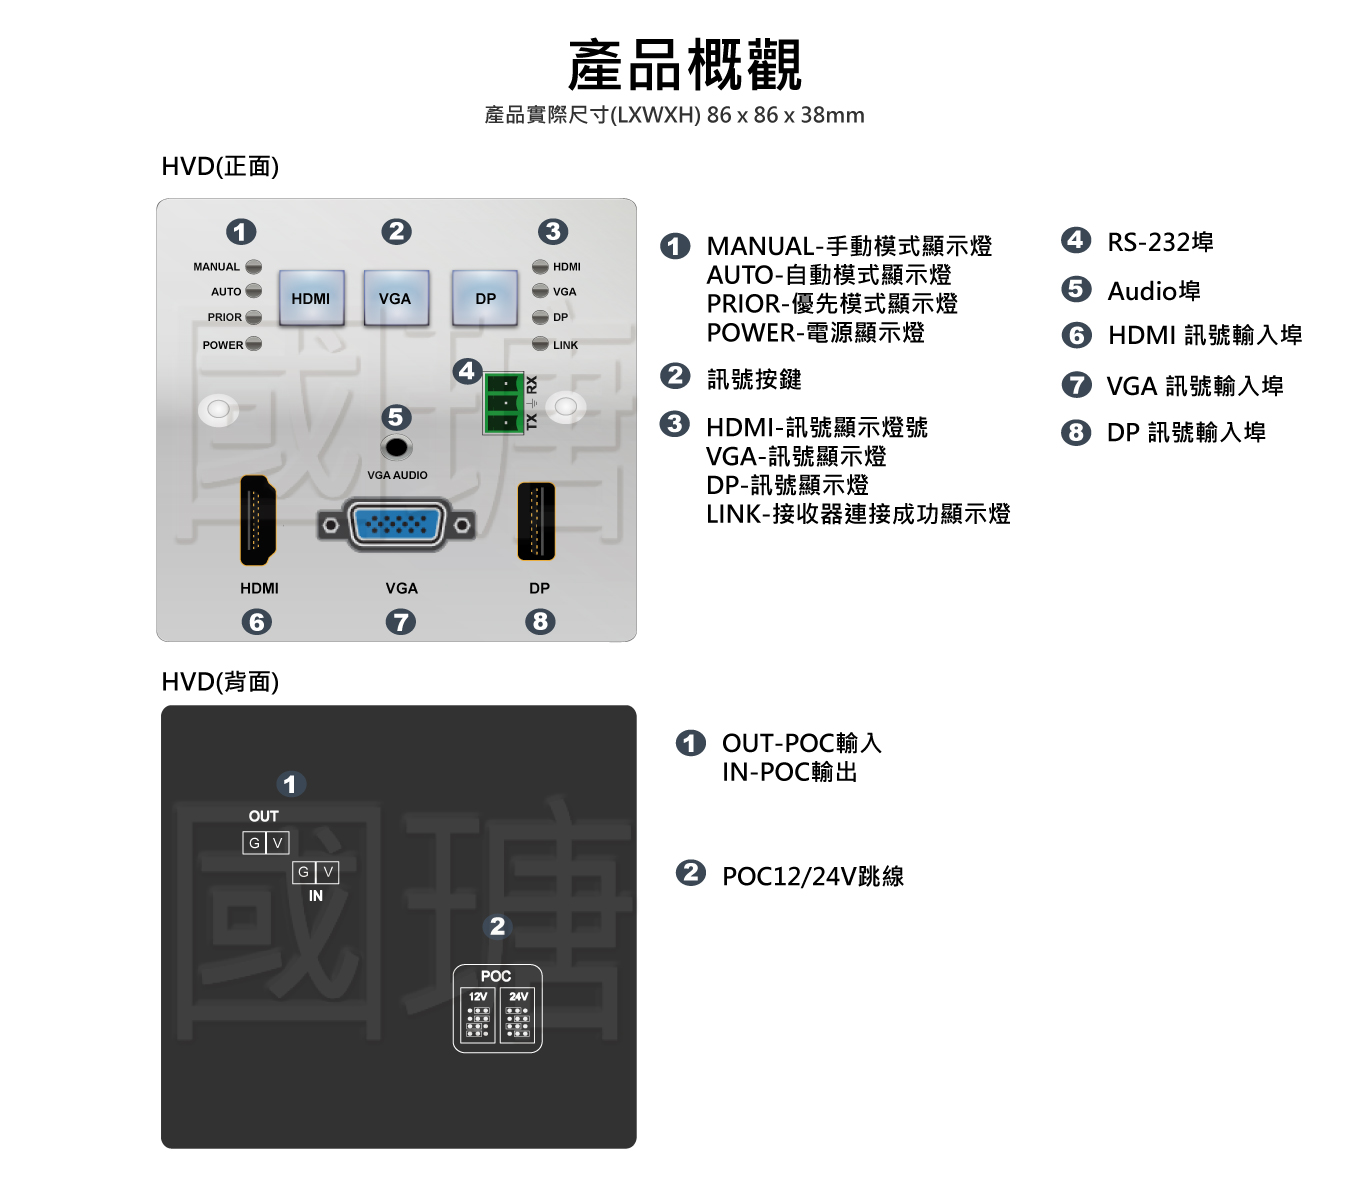 2021 4K HDMI、DP、VGA分散式延伸壁上座插, HDBaseT延伸技術, 壁掛式影音訊號延長器 | 台灣ACAFA國瑭